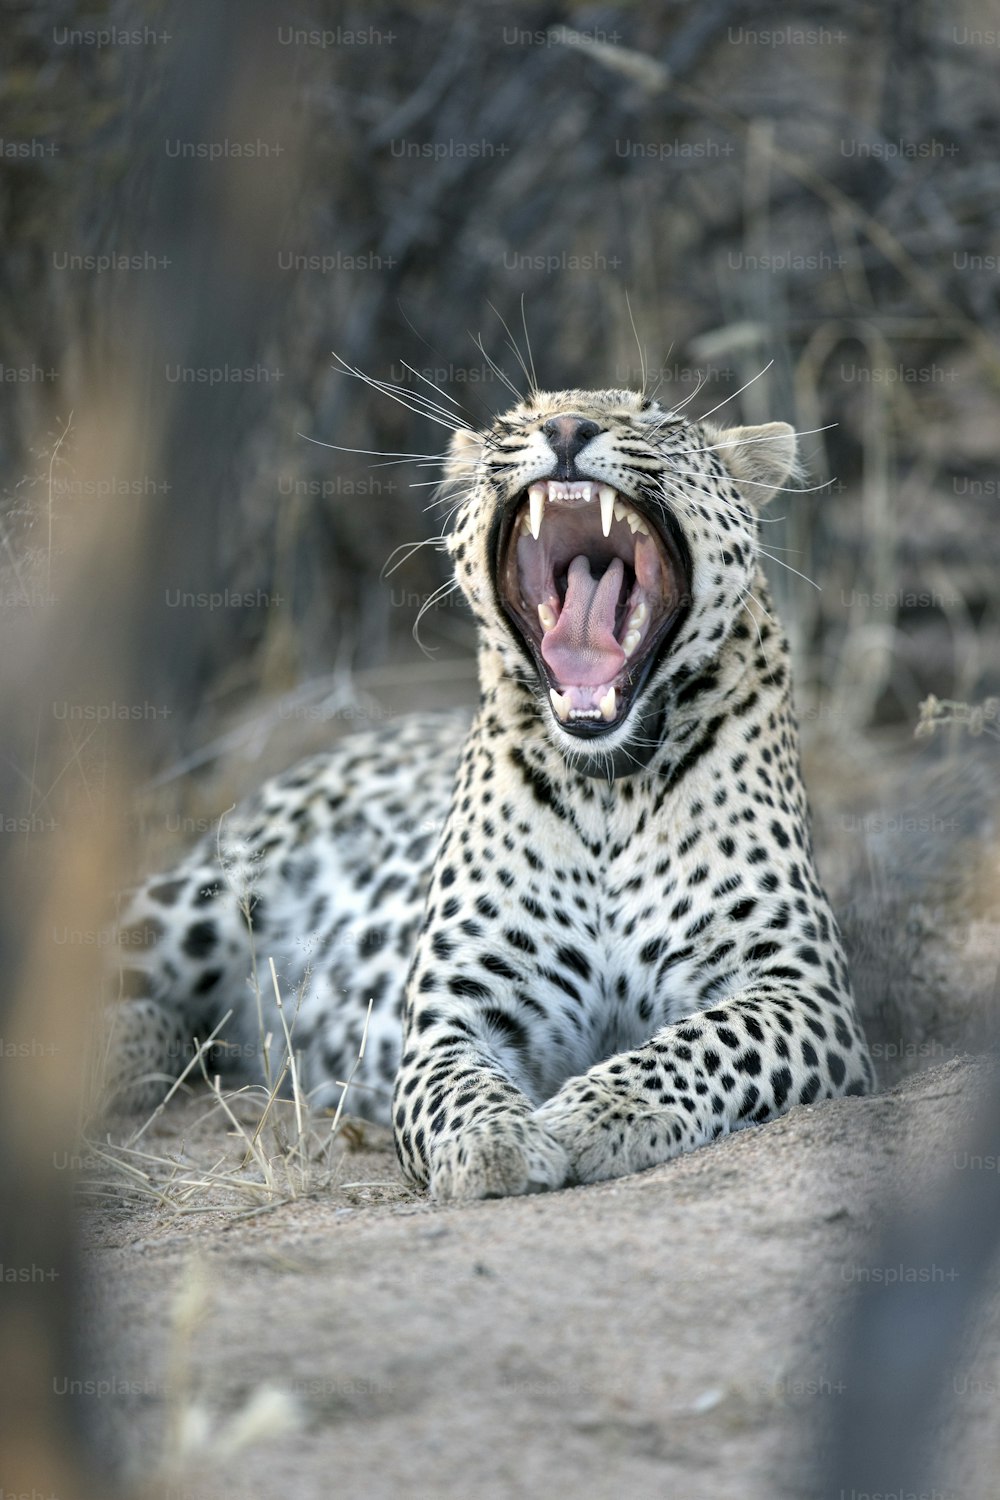 Leopard yawning showing its teeth